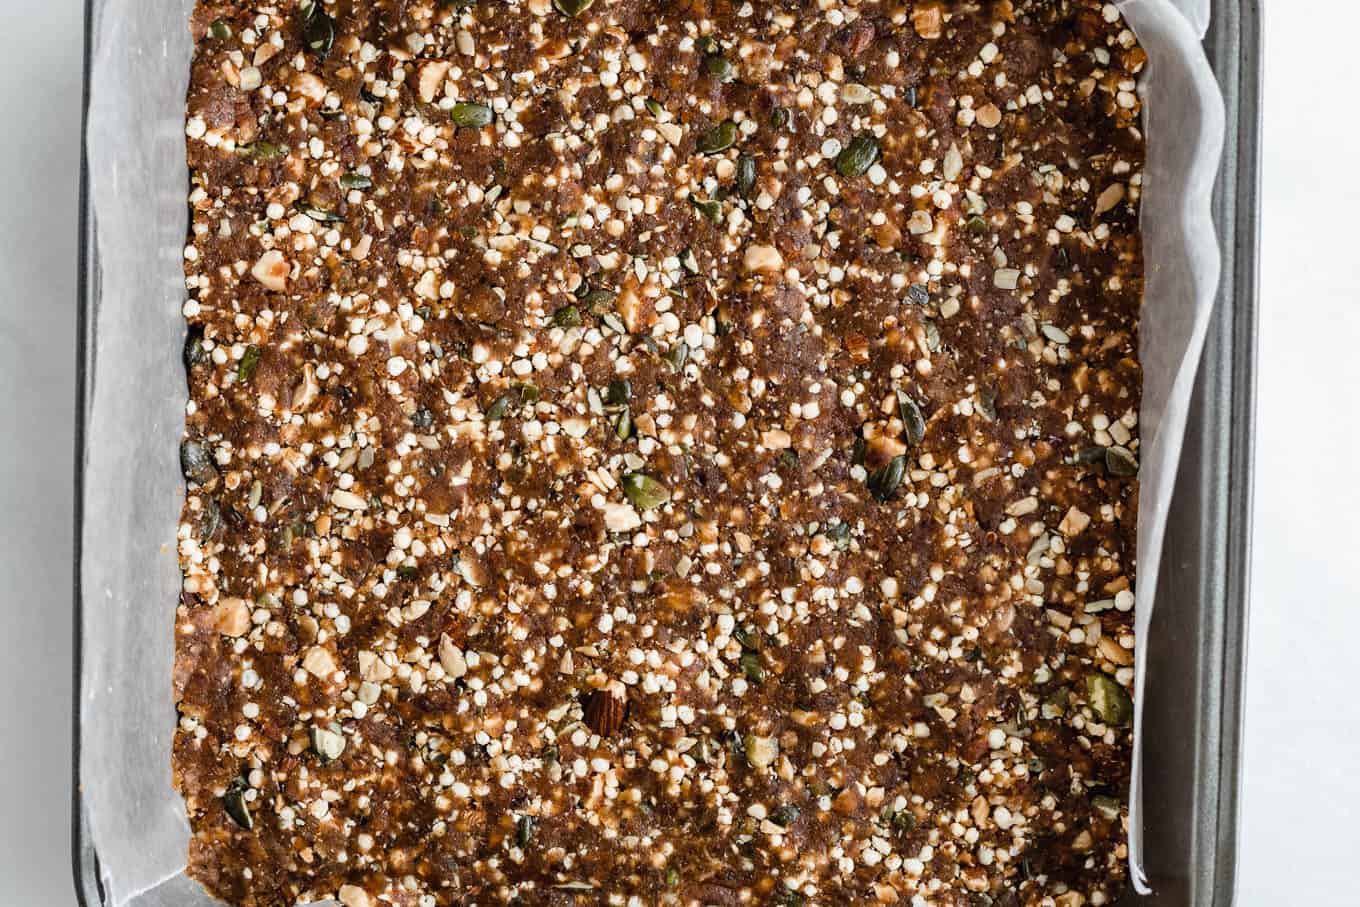 Quinoa date bars pressed into a pan